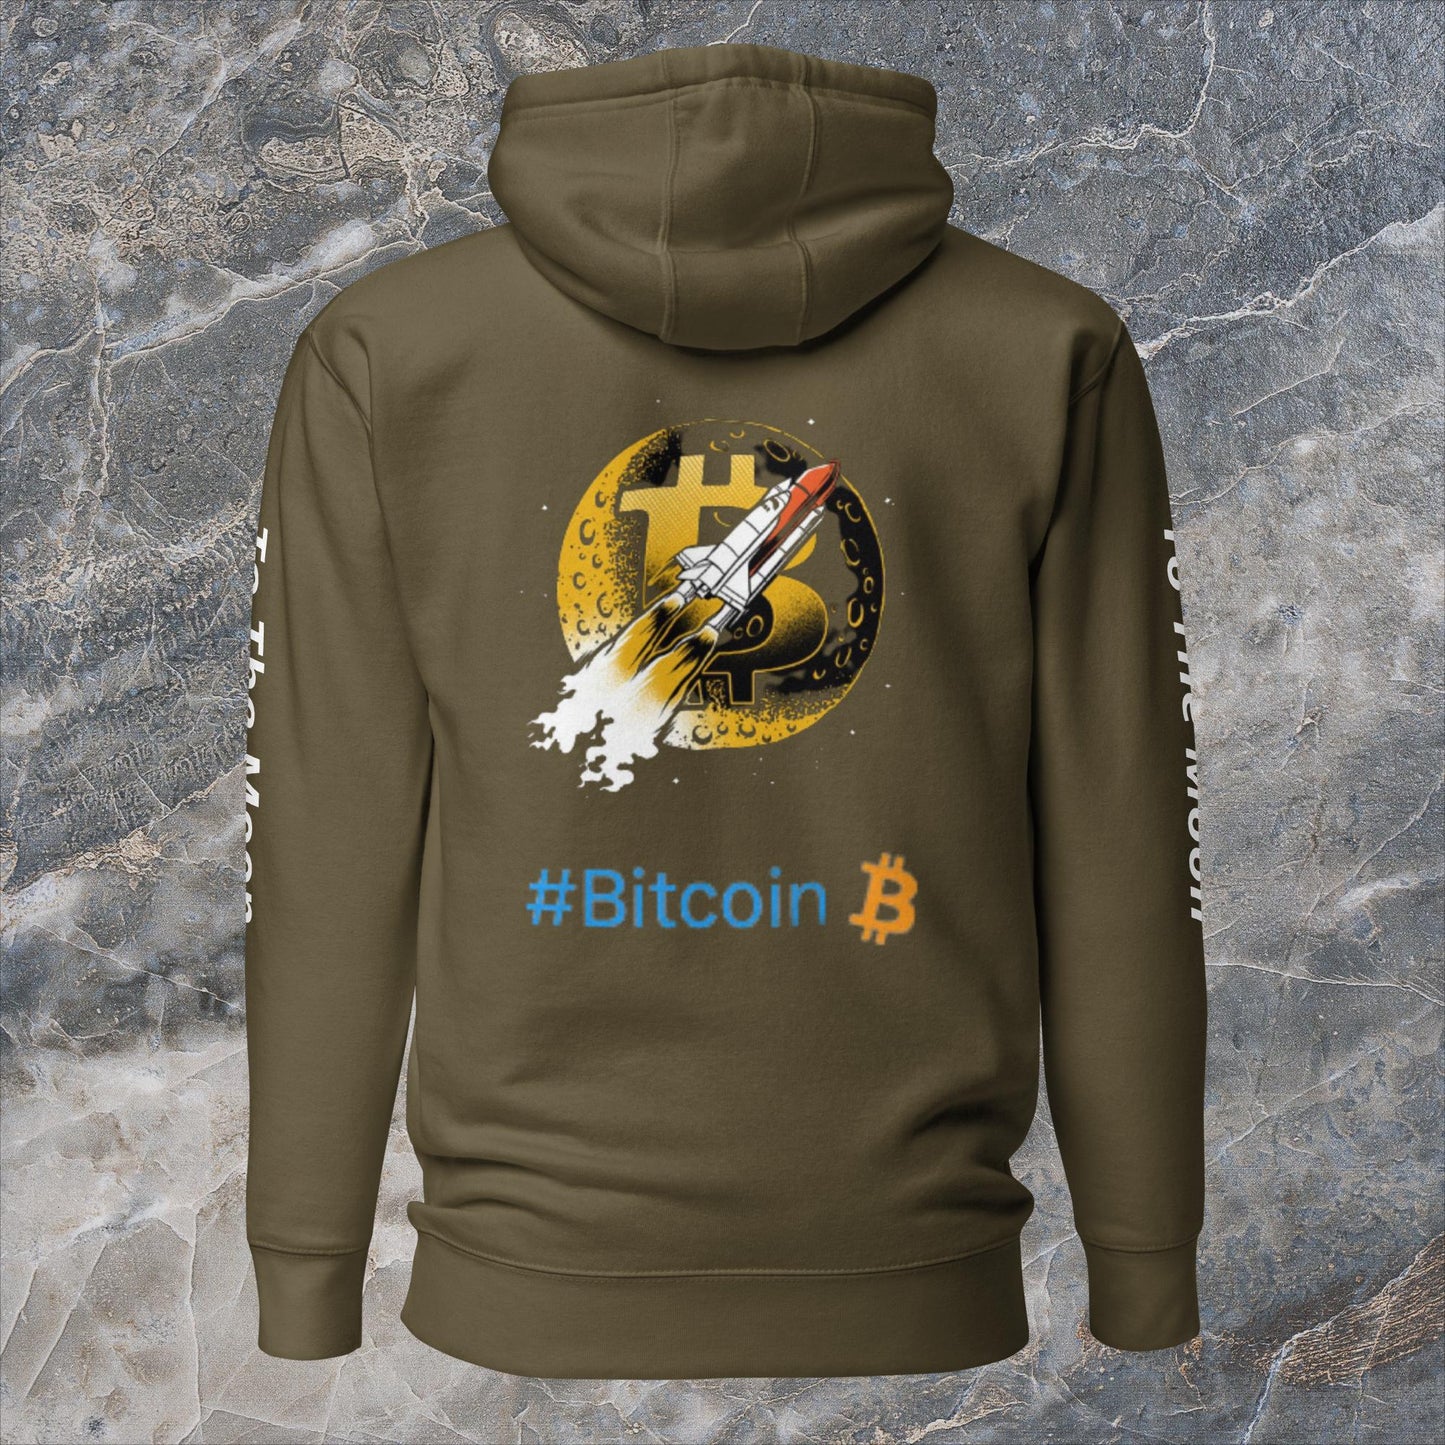 Bitcoin To The Moon - Hoodie